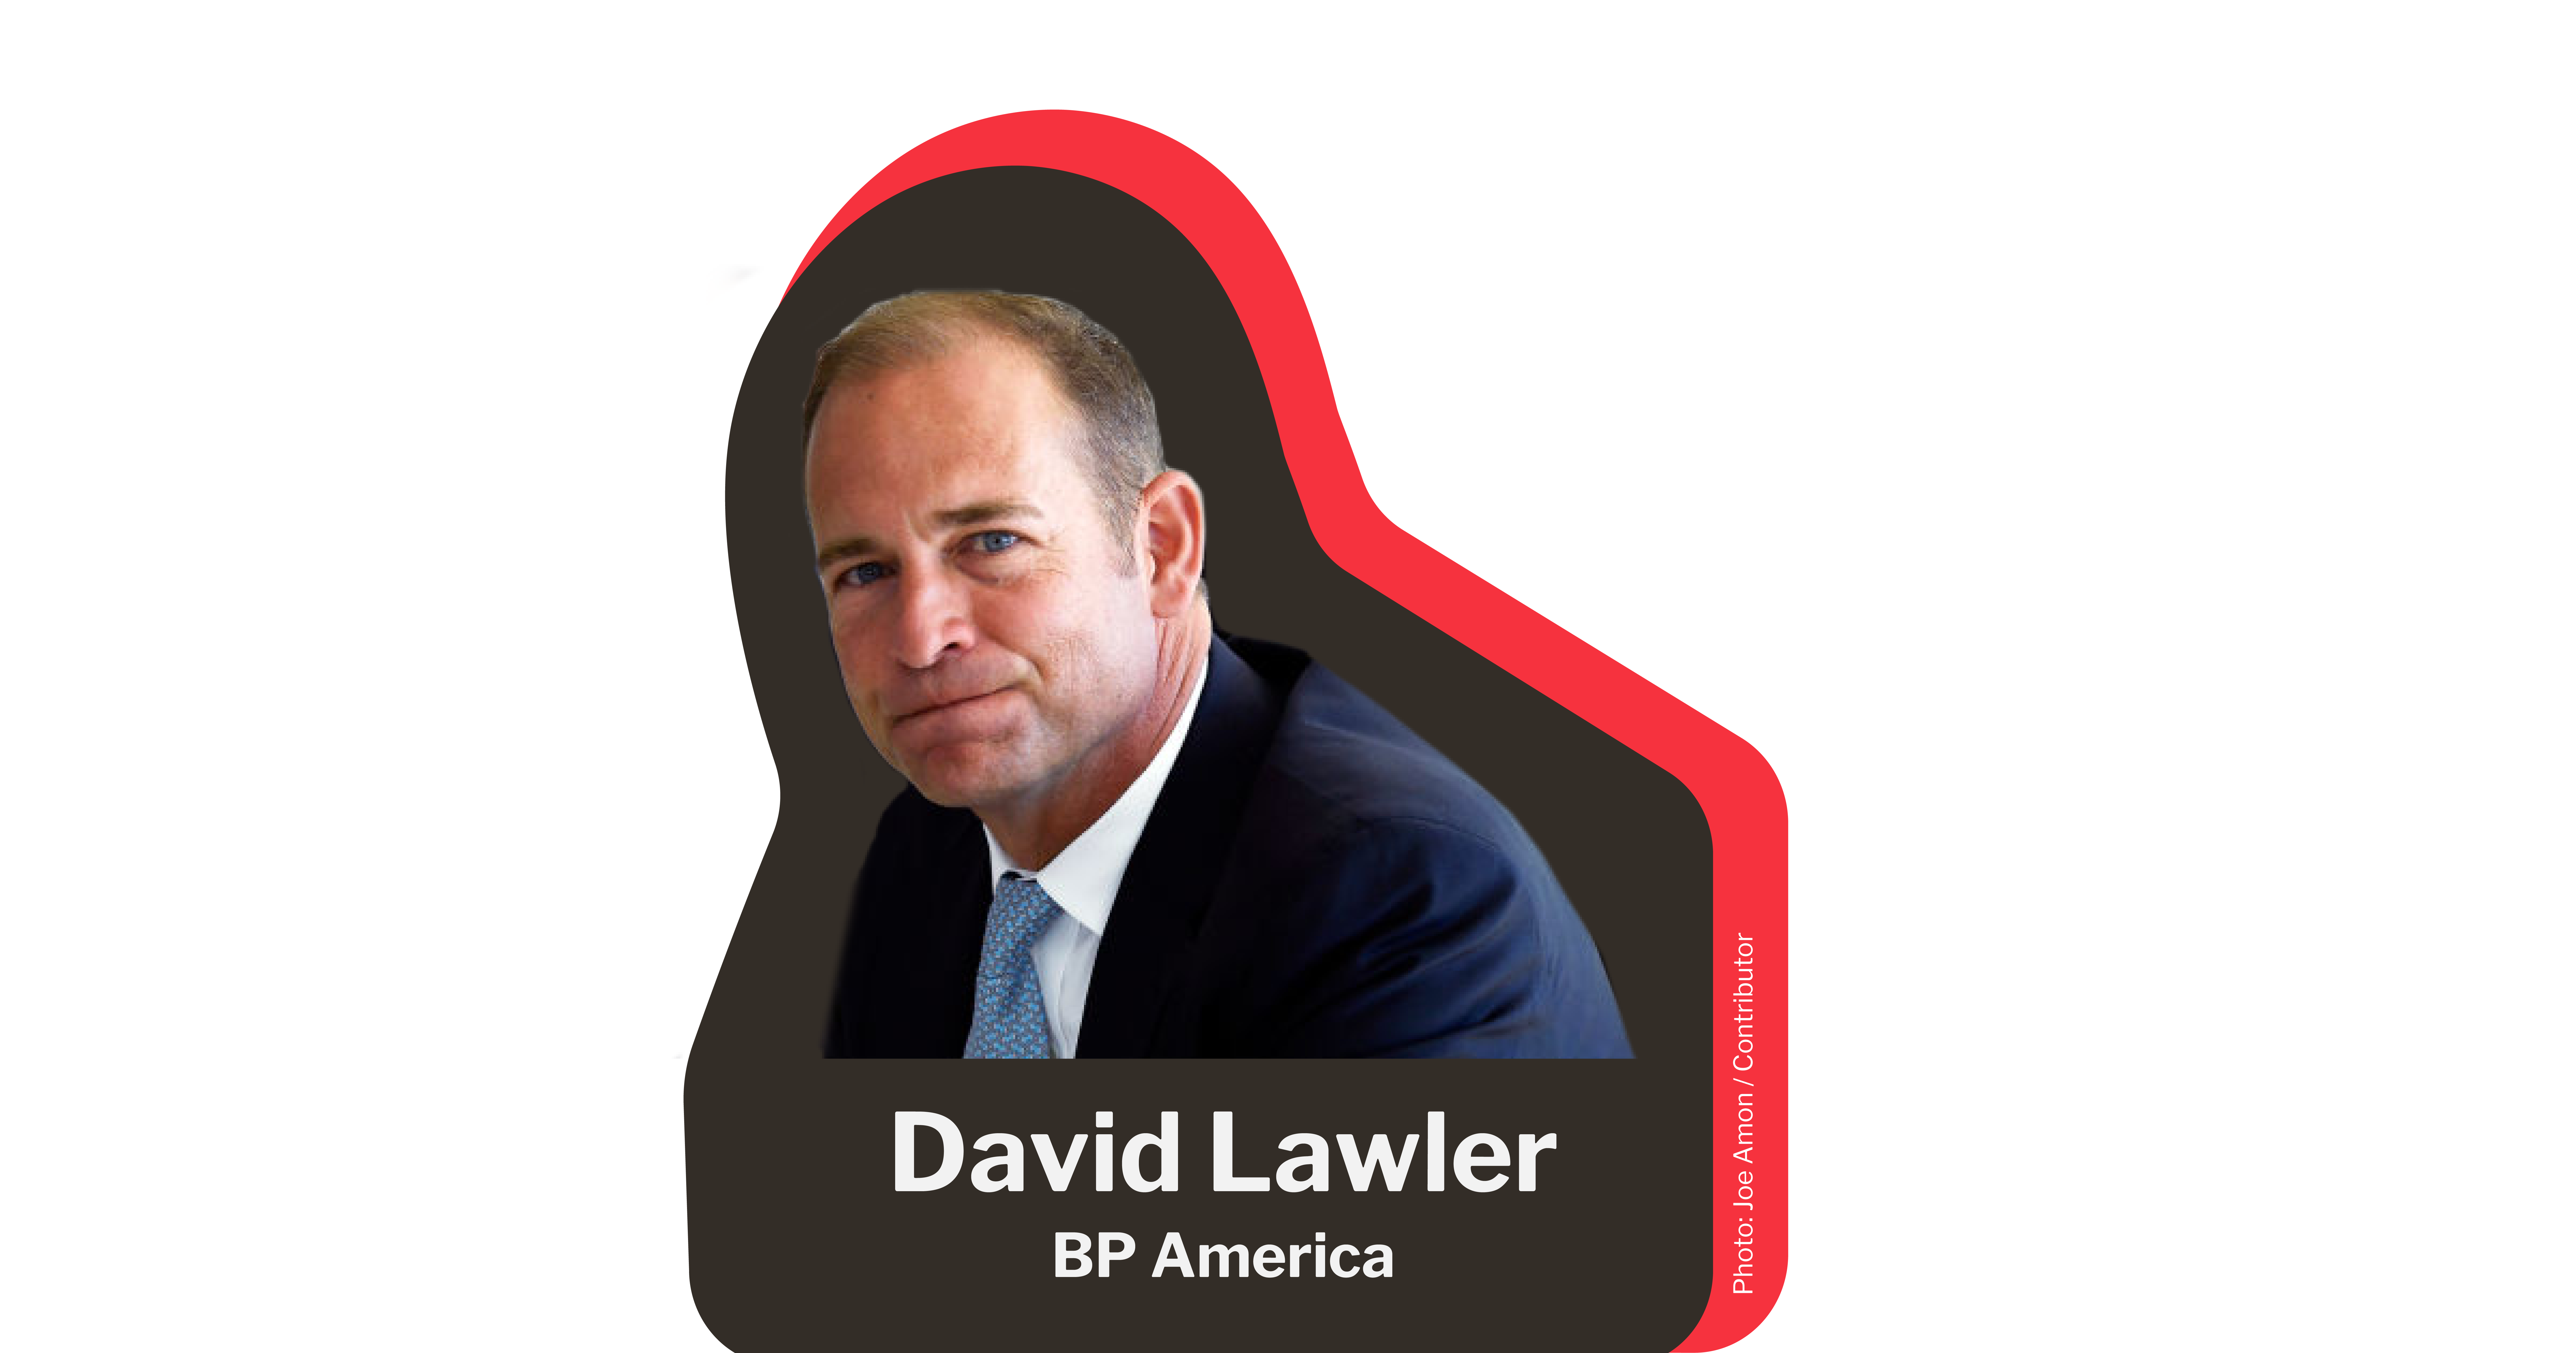 BP America CEO David Lawler